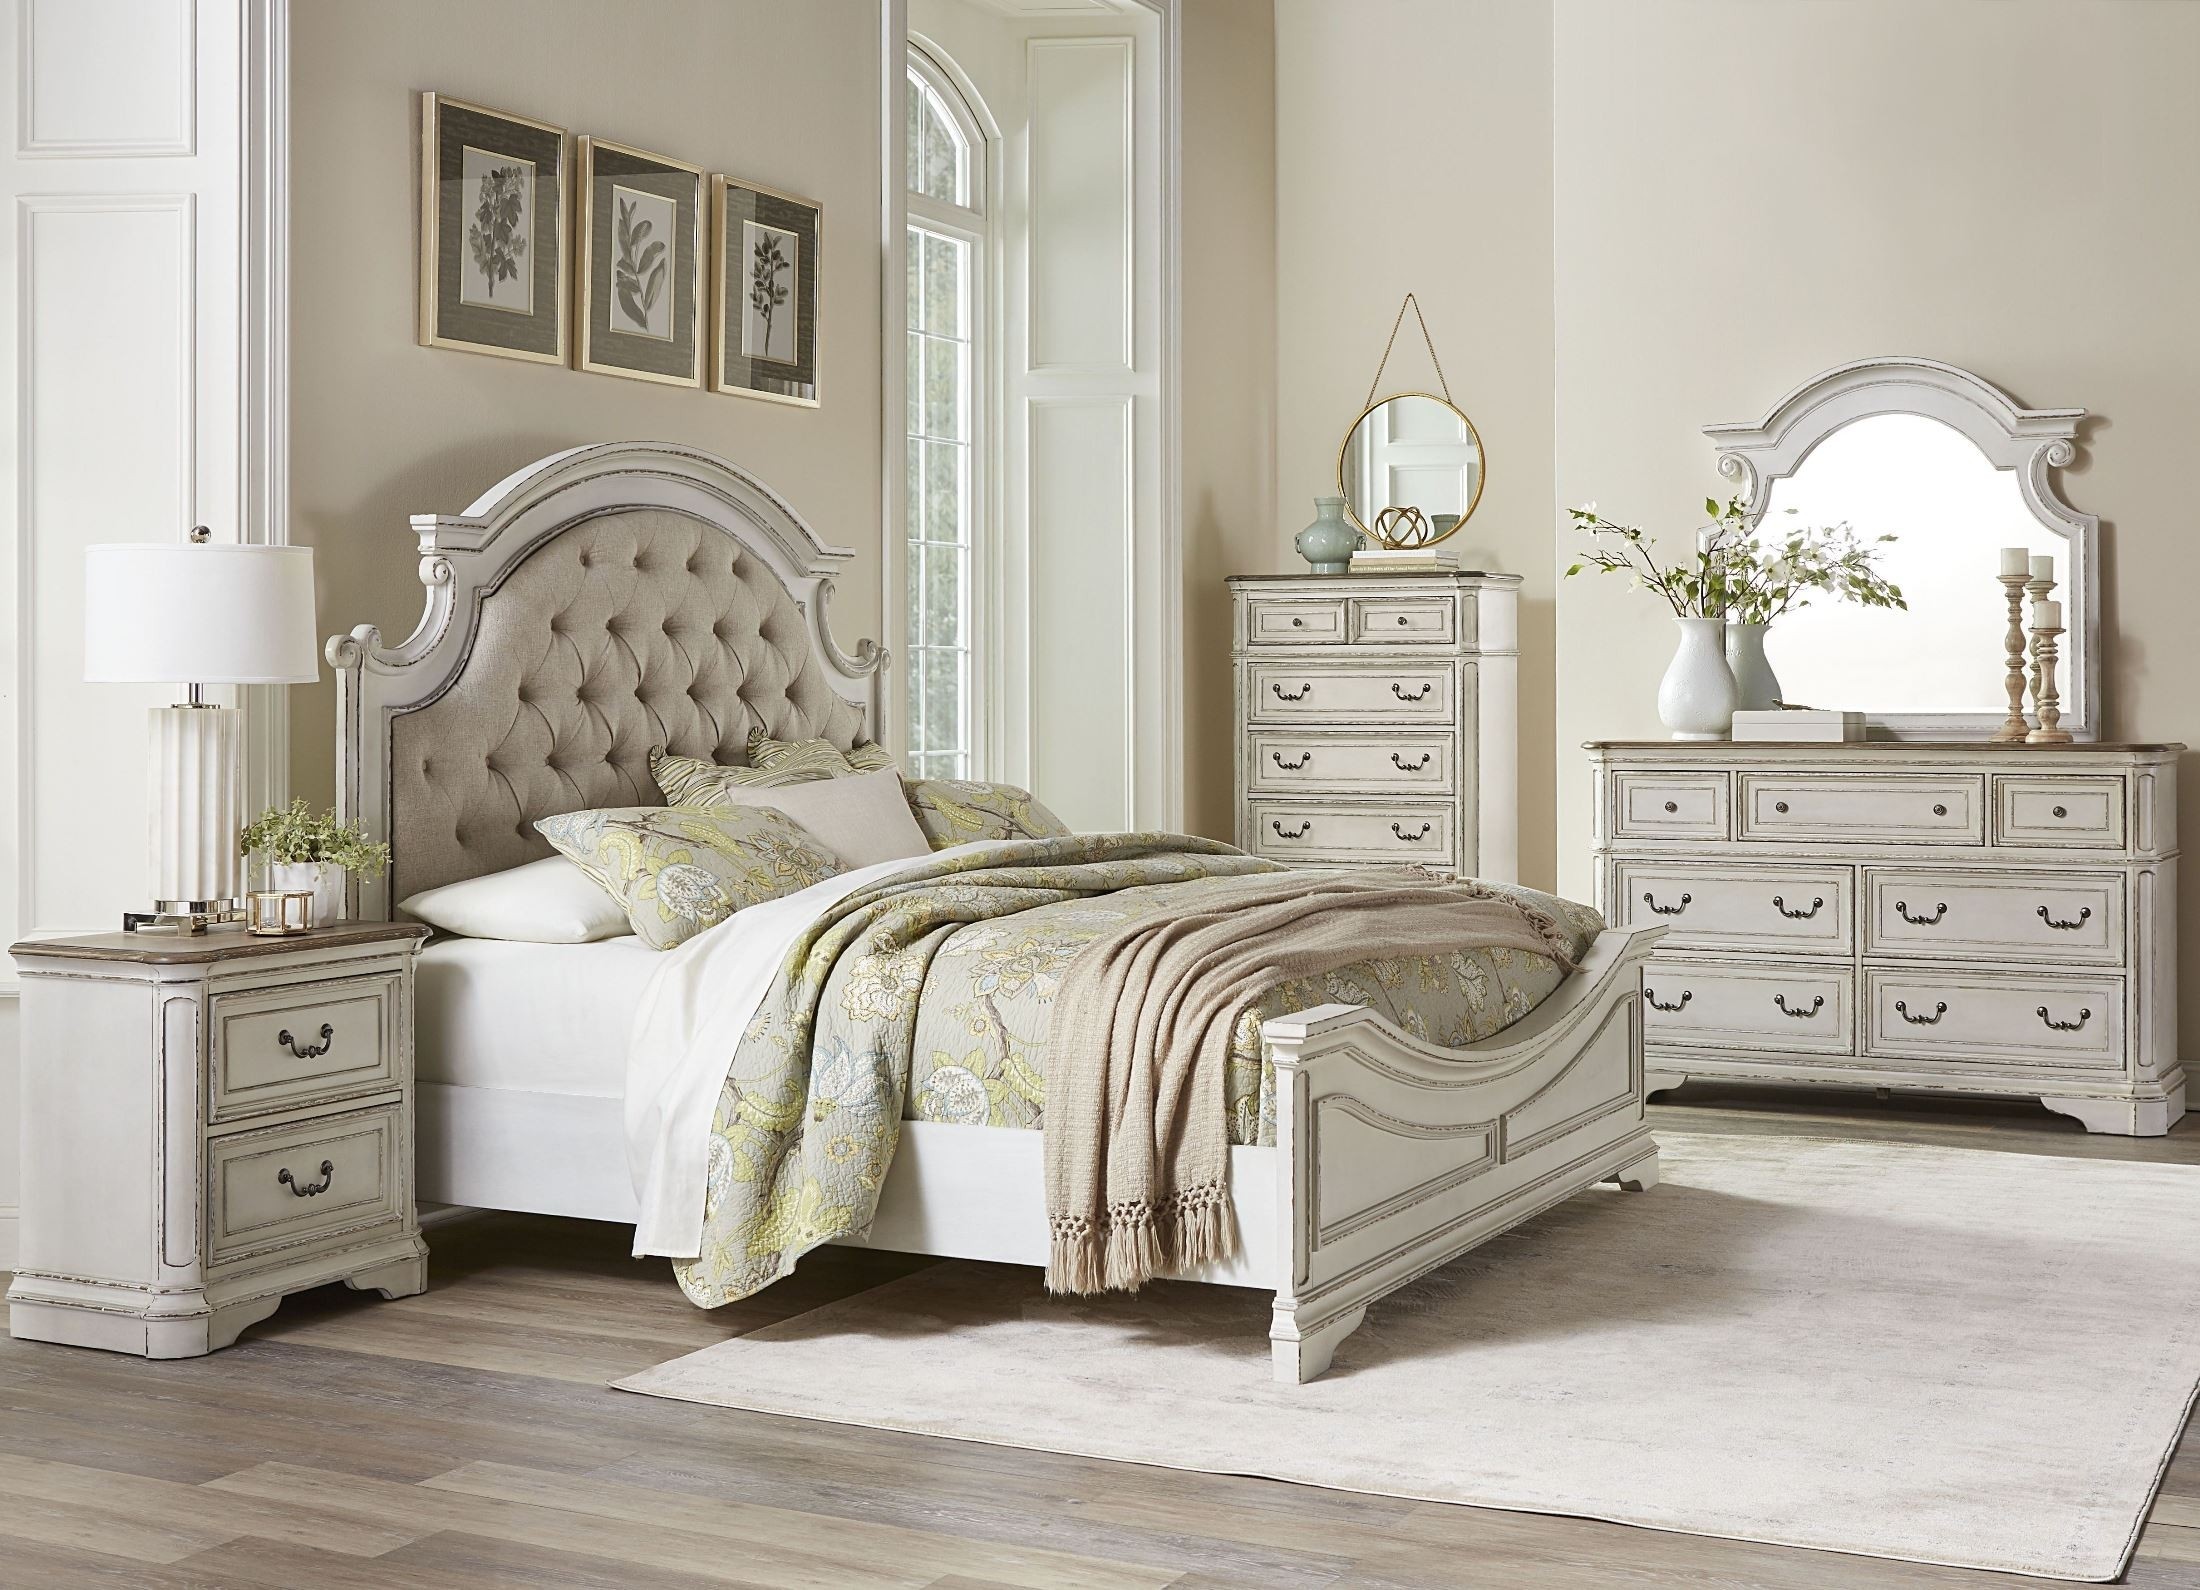 alan ward white bedroom furniture